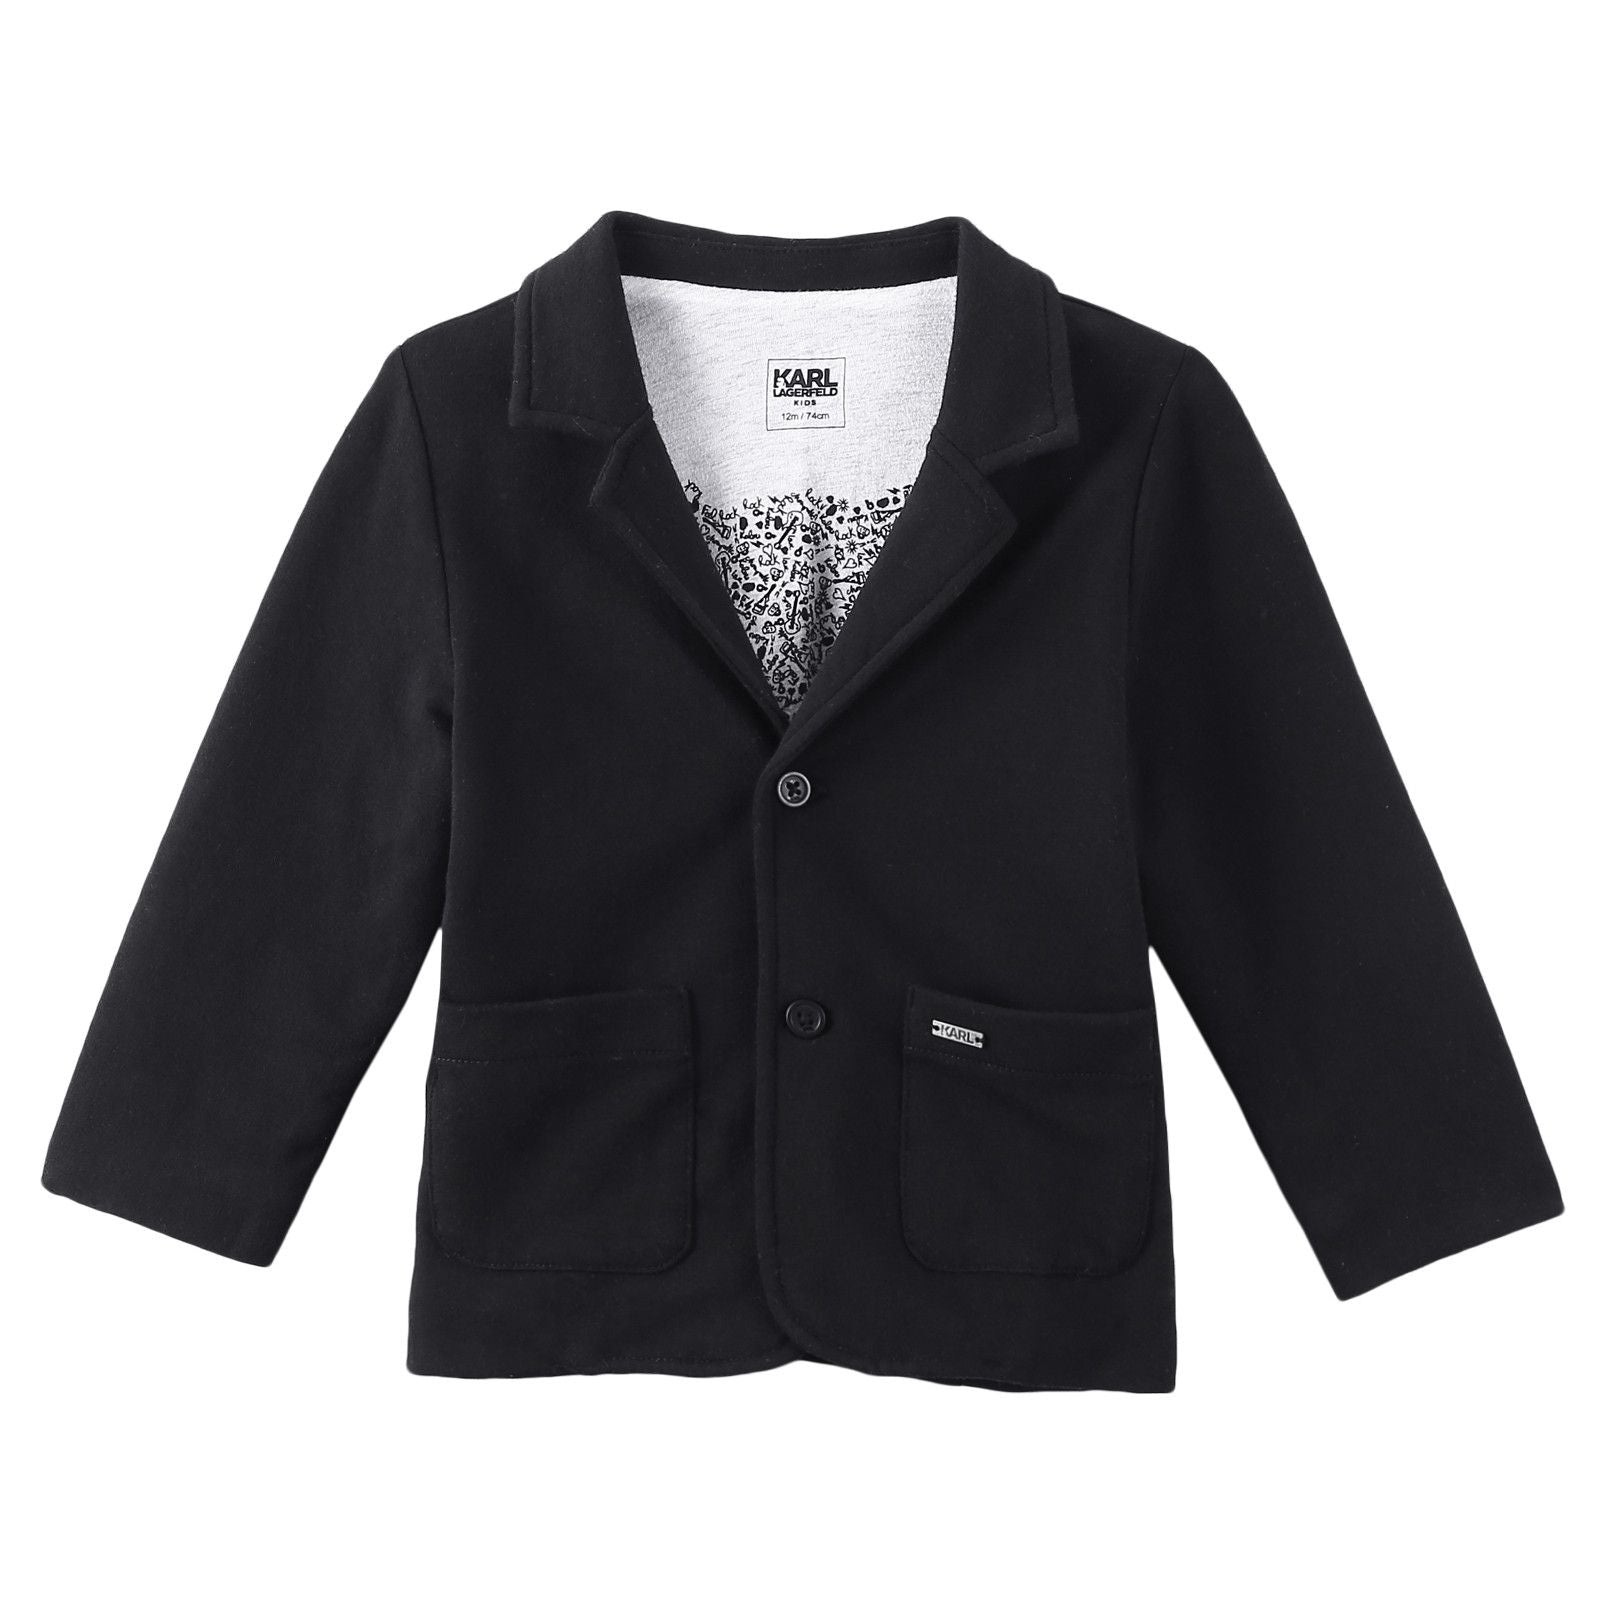 Baby Black Cotton Blazer With Patch Jackets - CÉMAROSE | Children's Fashion Store - 1